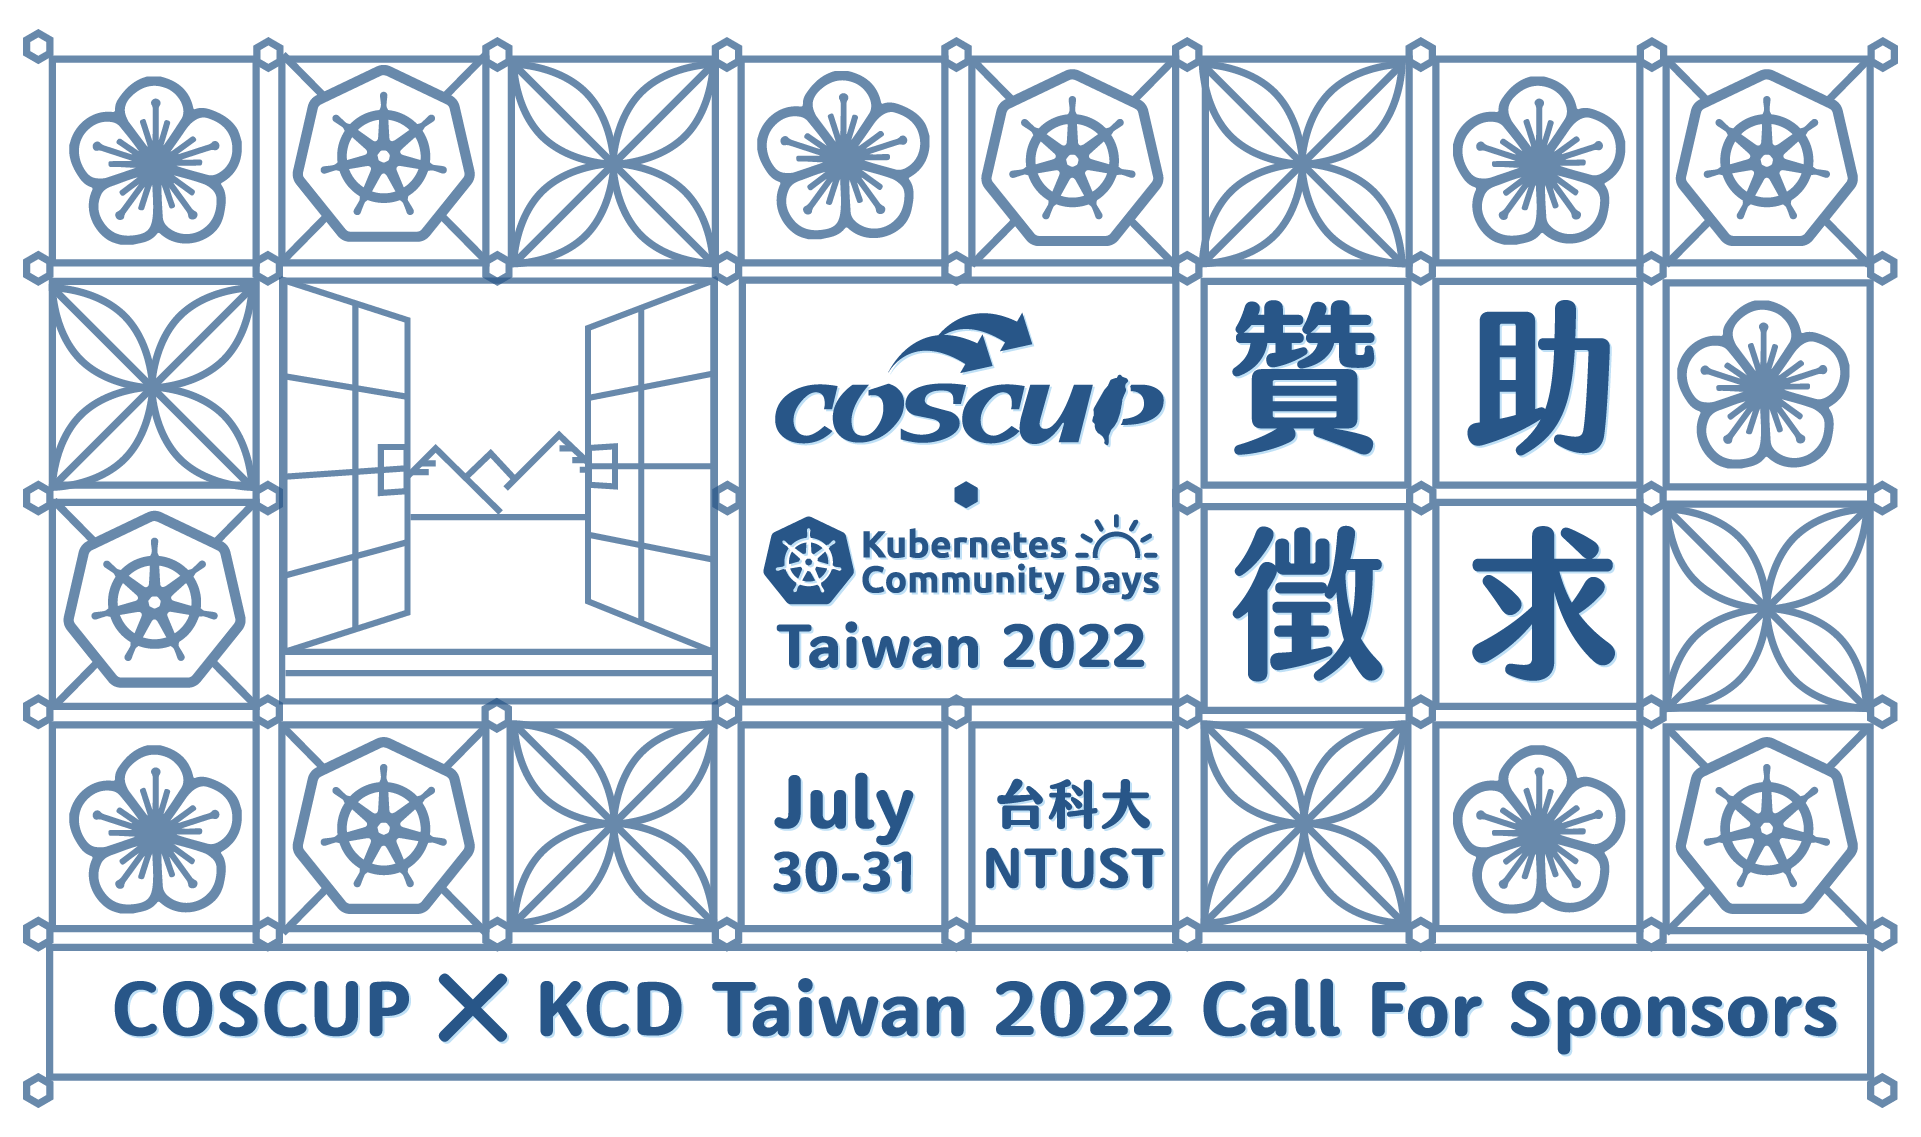 COSCUP x KCD Taiwan 2022 Sponsorship Program